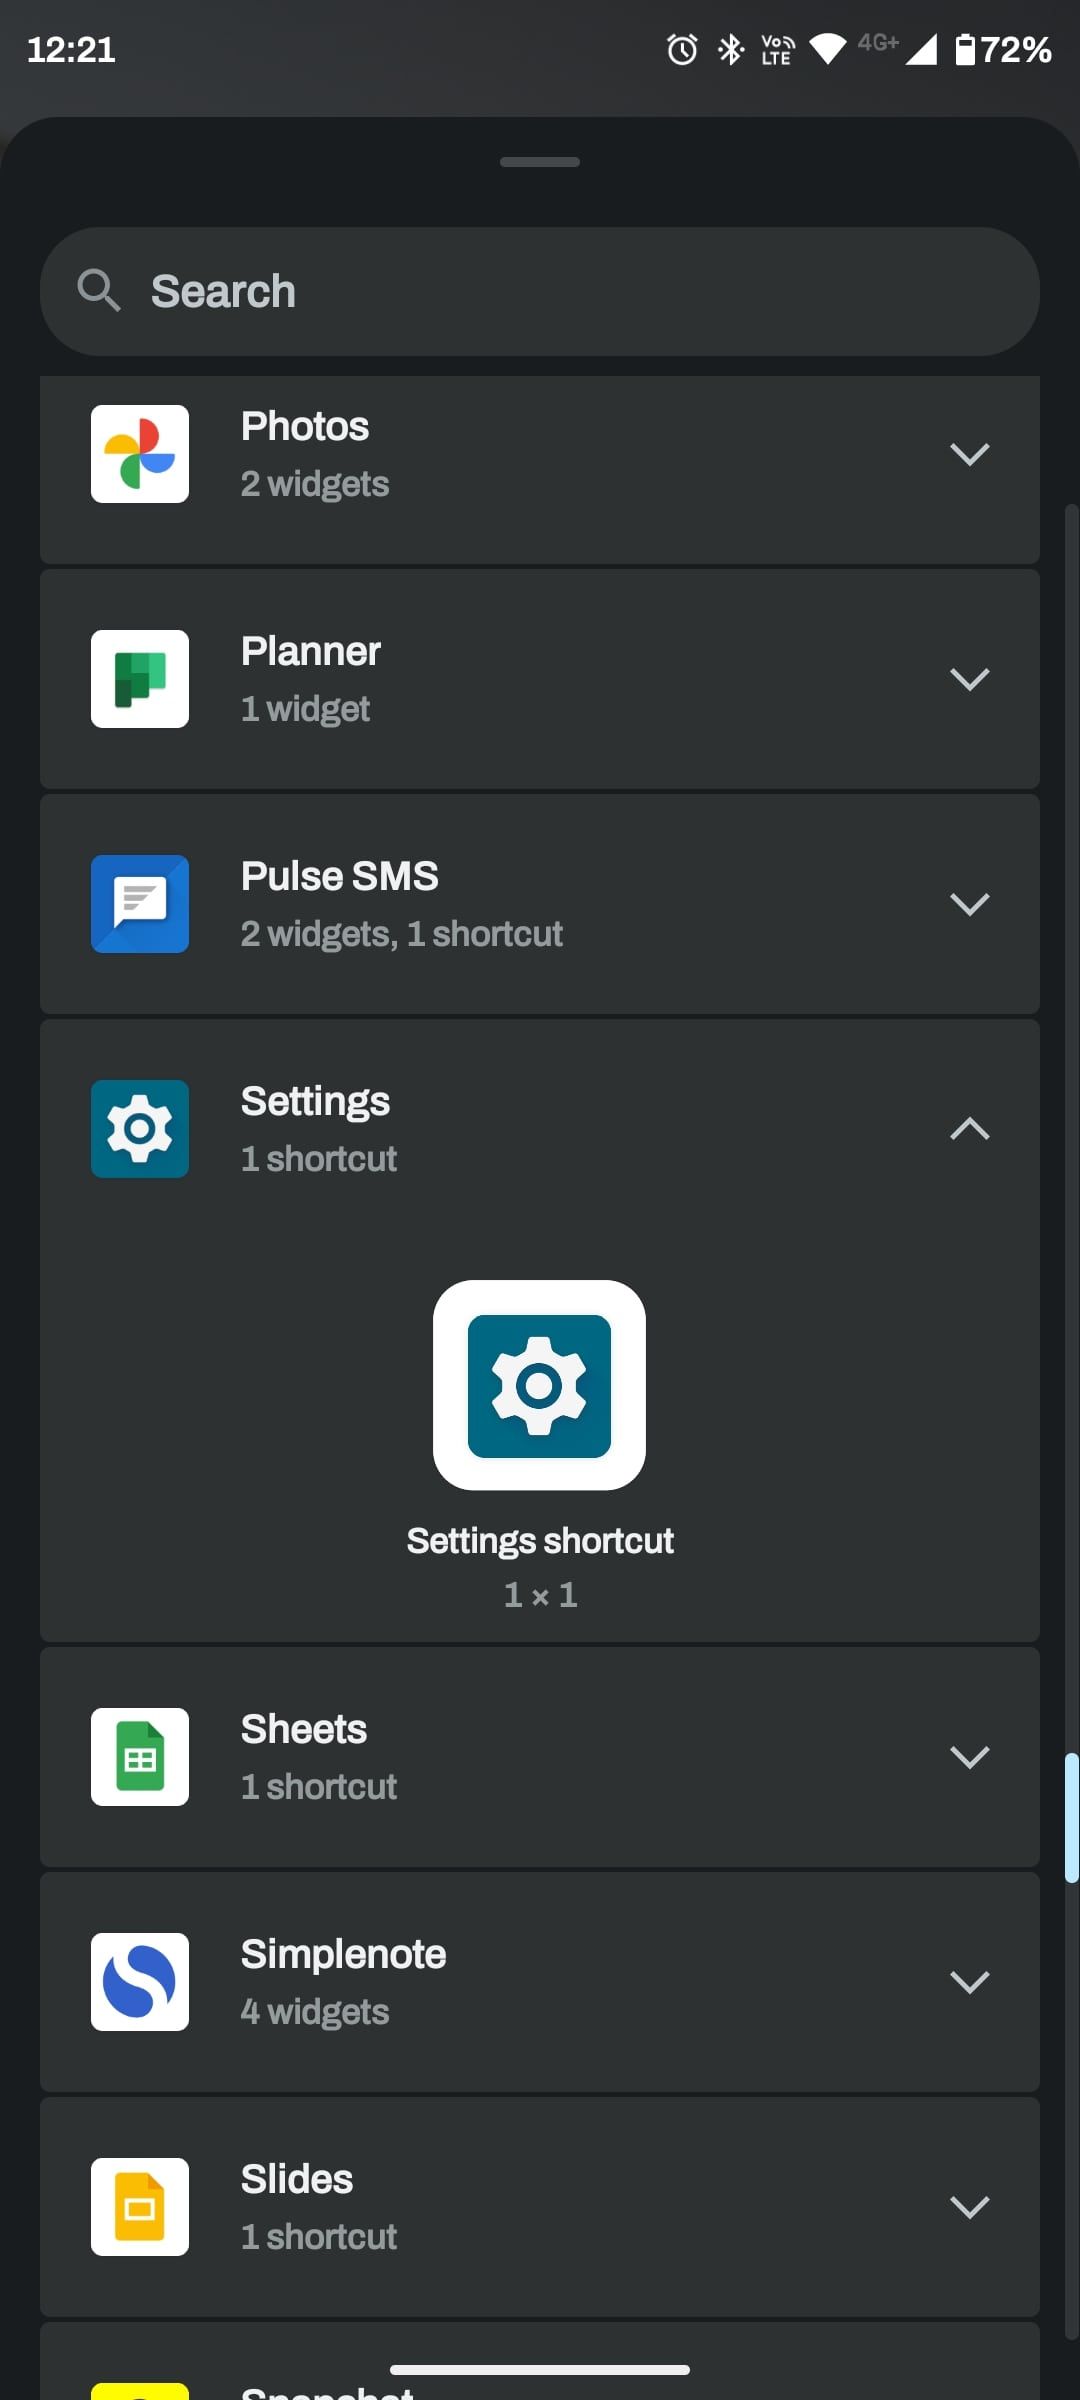 Settings shortcut selected in widget menu